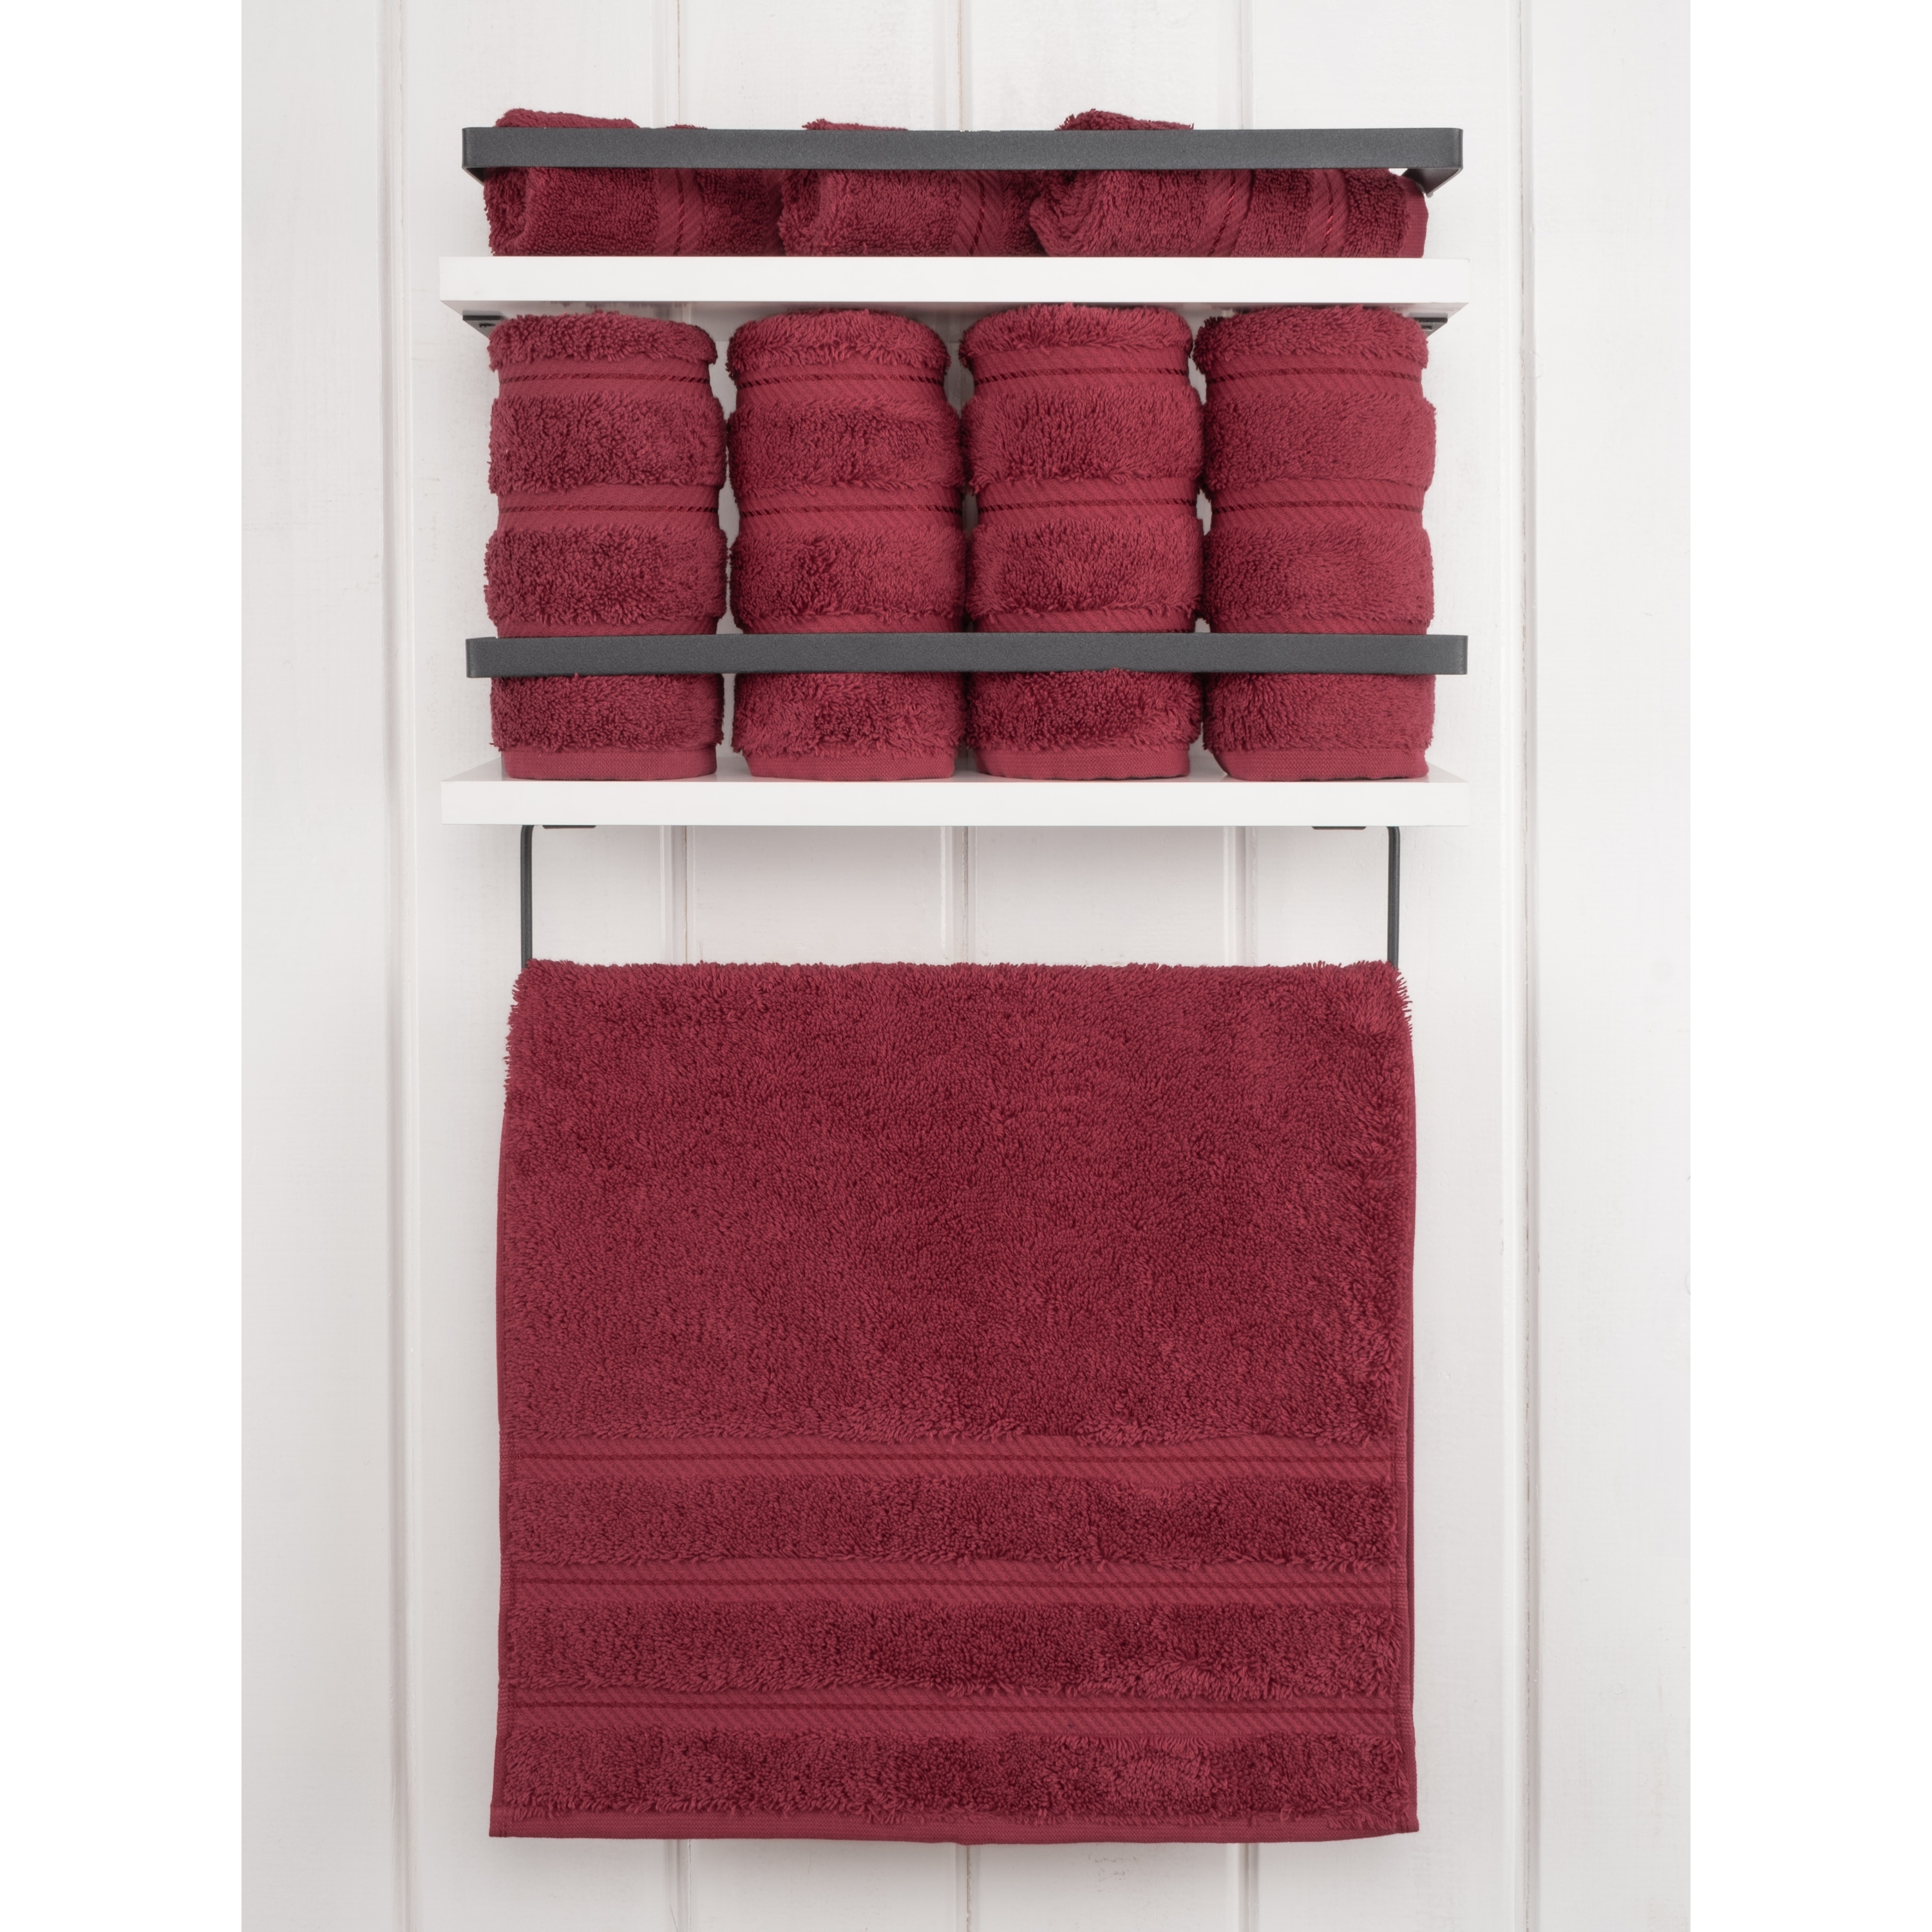 https://ak1.ostkcdn.com/images/products/is/images/direct/732e6c185316f9e9de0c7345e30f6cbaf8067ba9/American-Soft-Linen-4-Piece-Turkish-Hand-Towel-Set.jpg